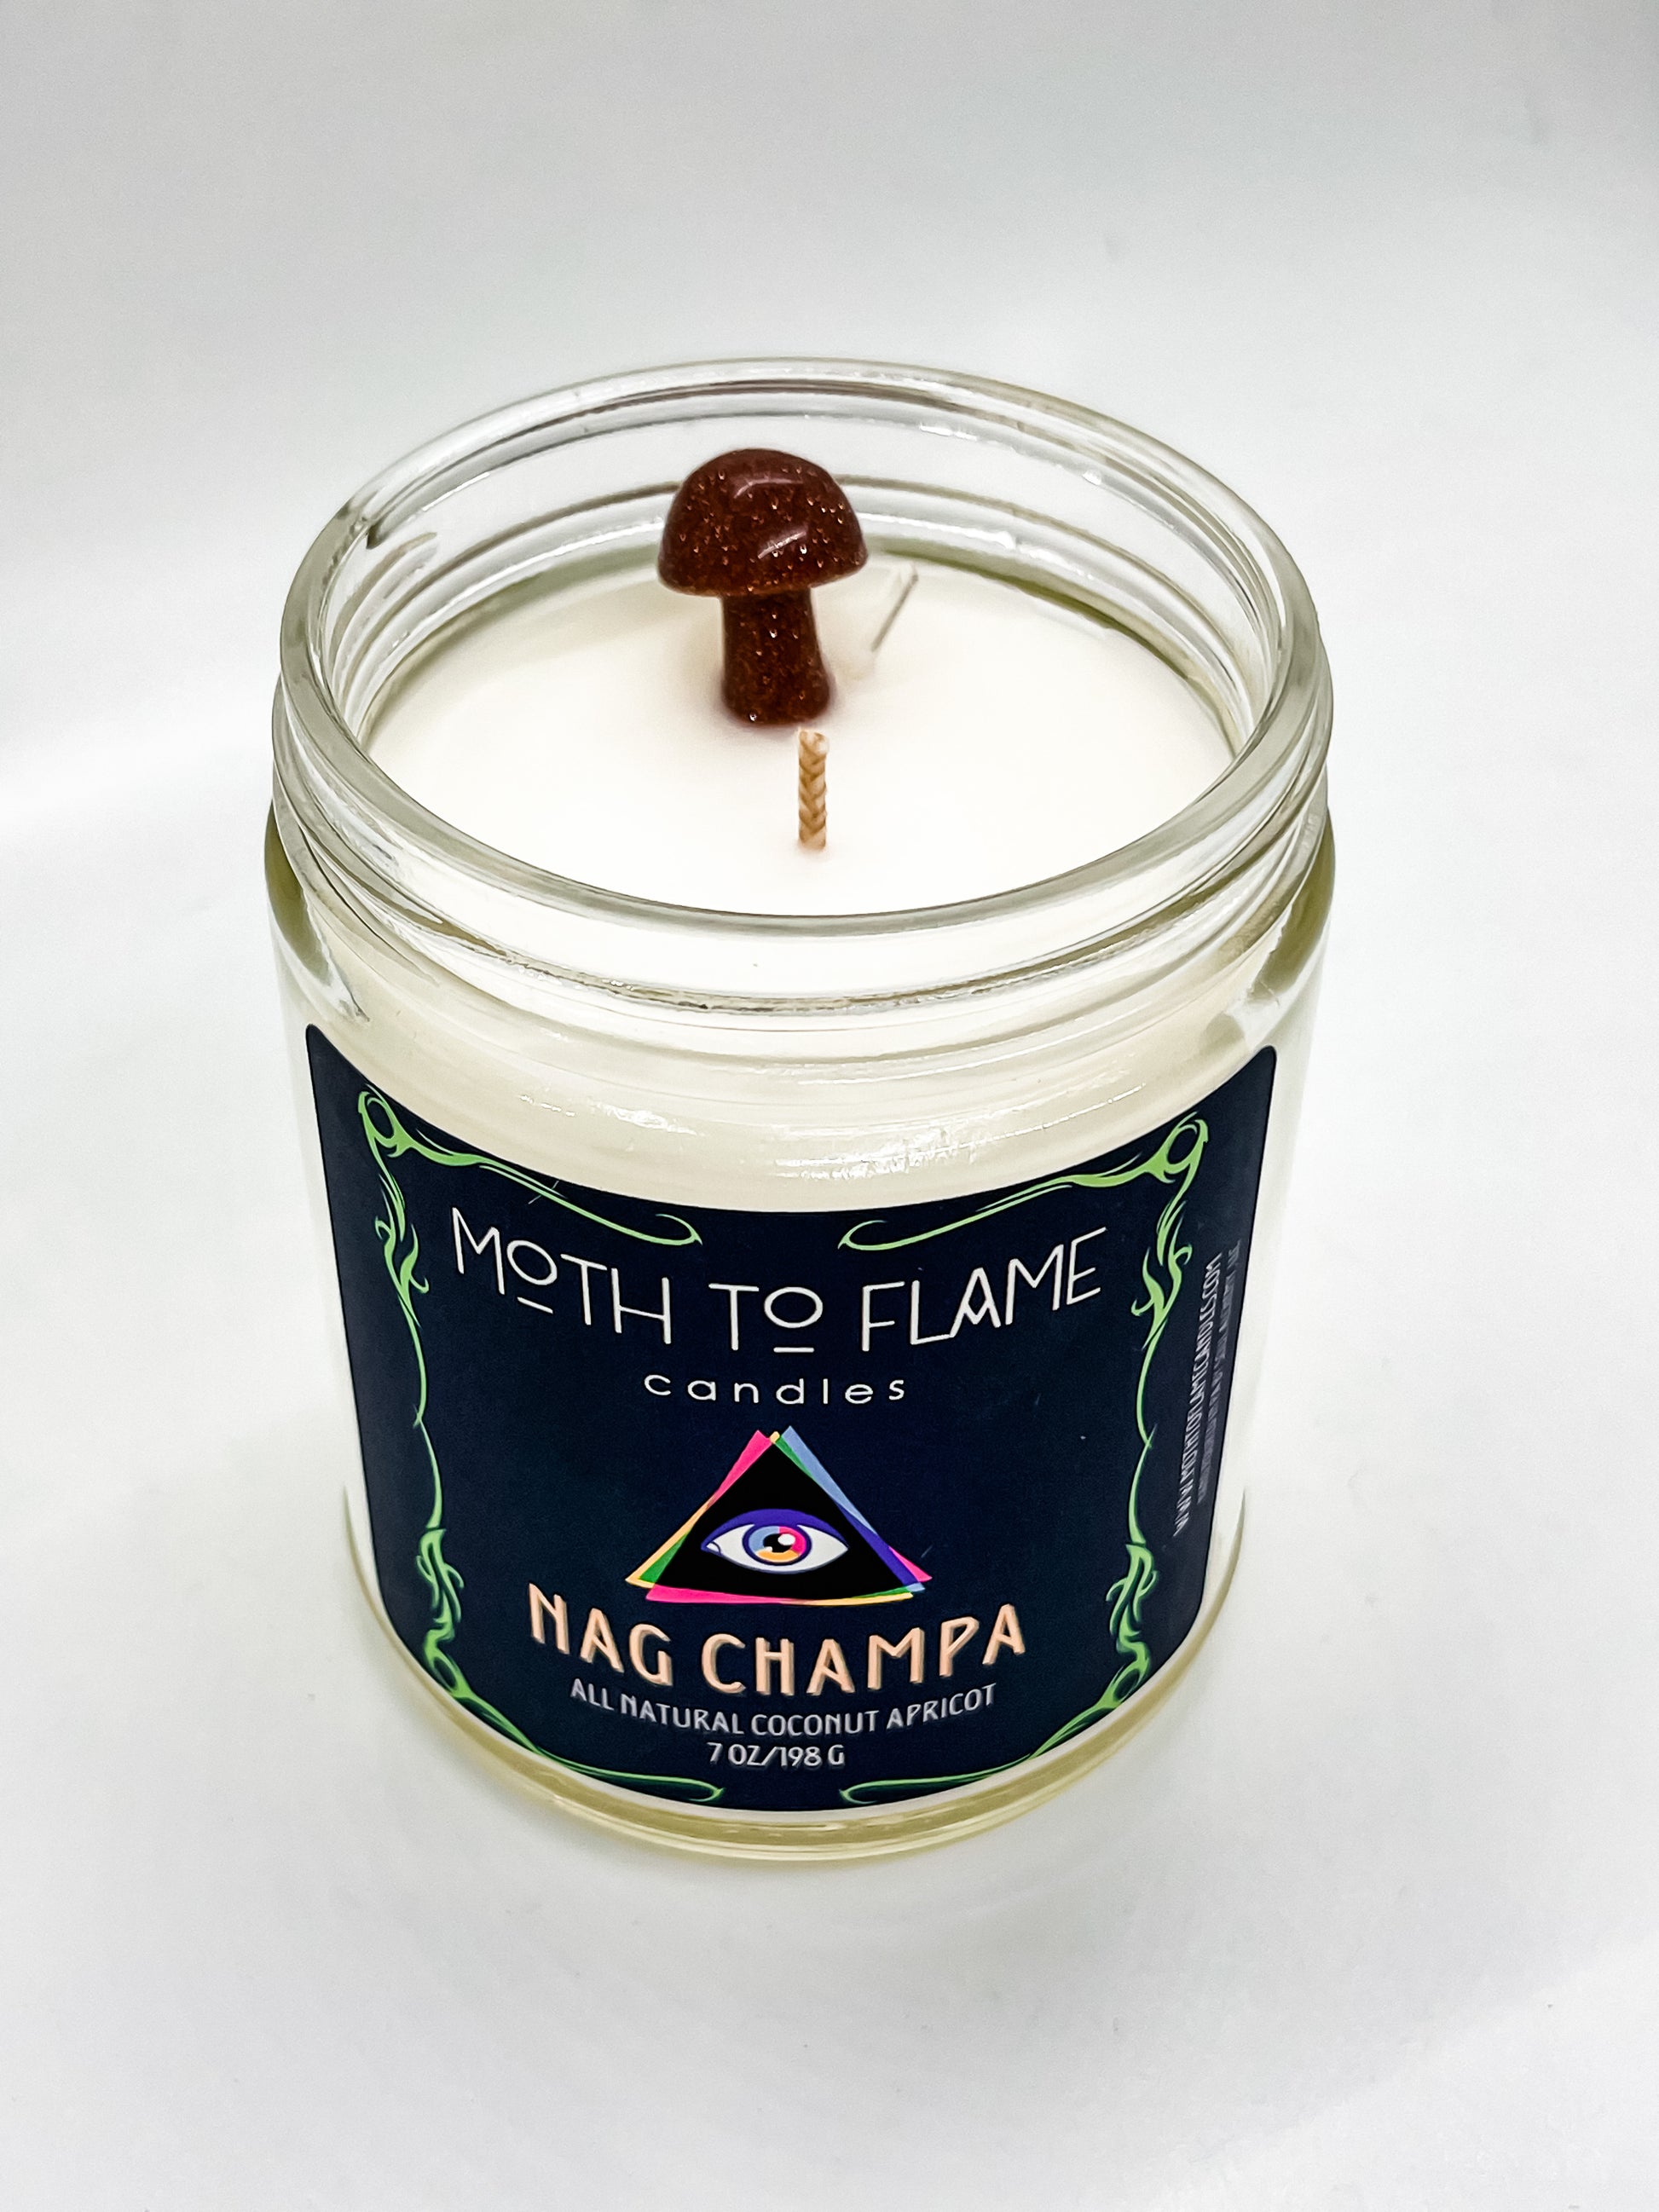 Nag Champa Candle - 6 ounce - 40 Hour Burn